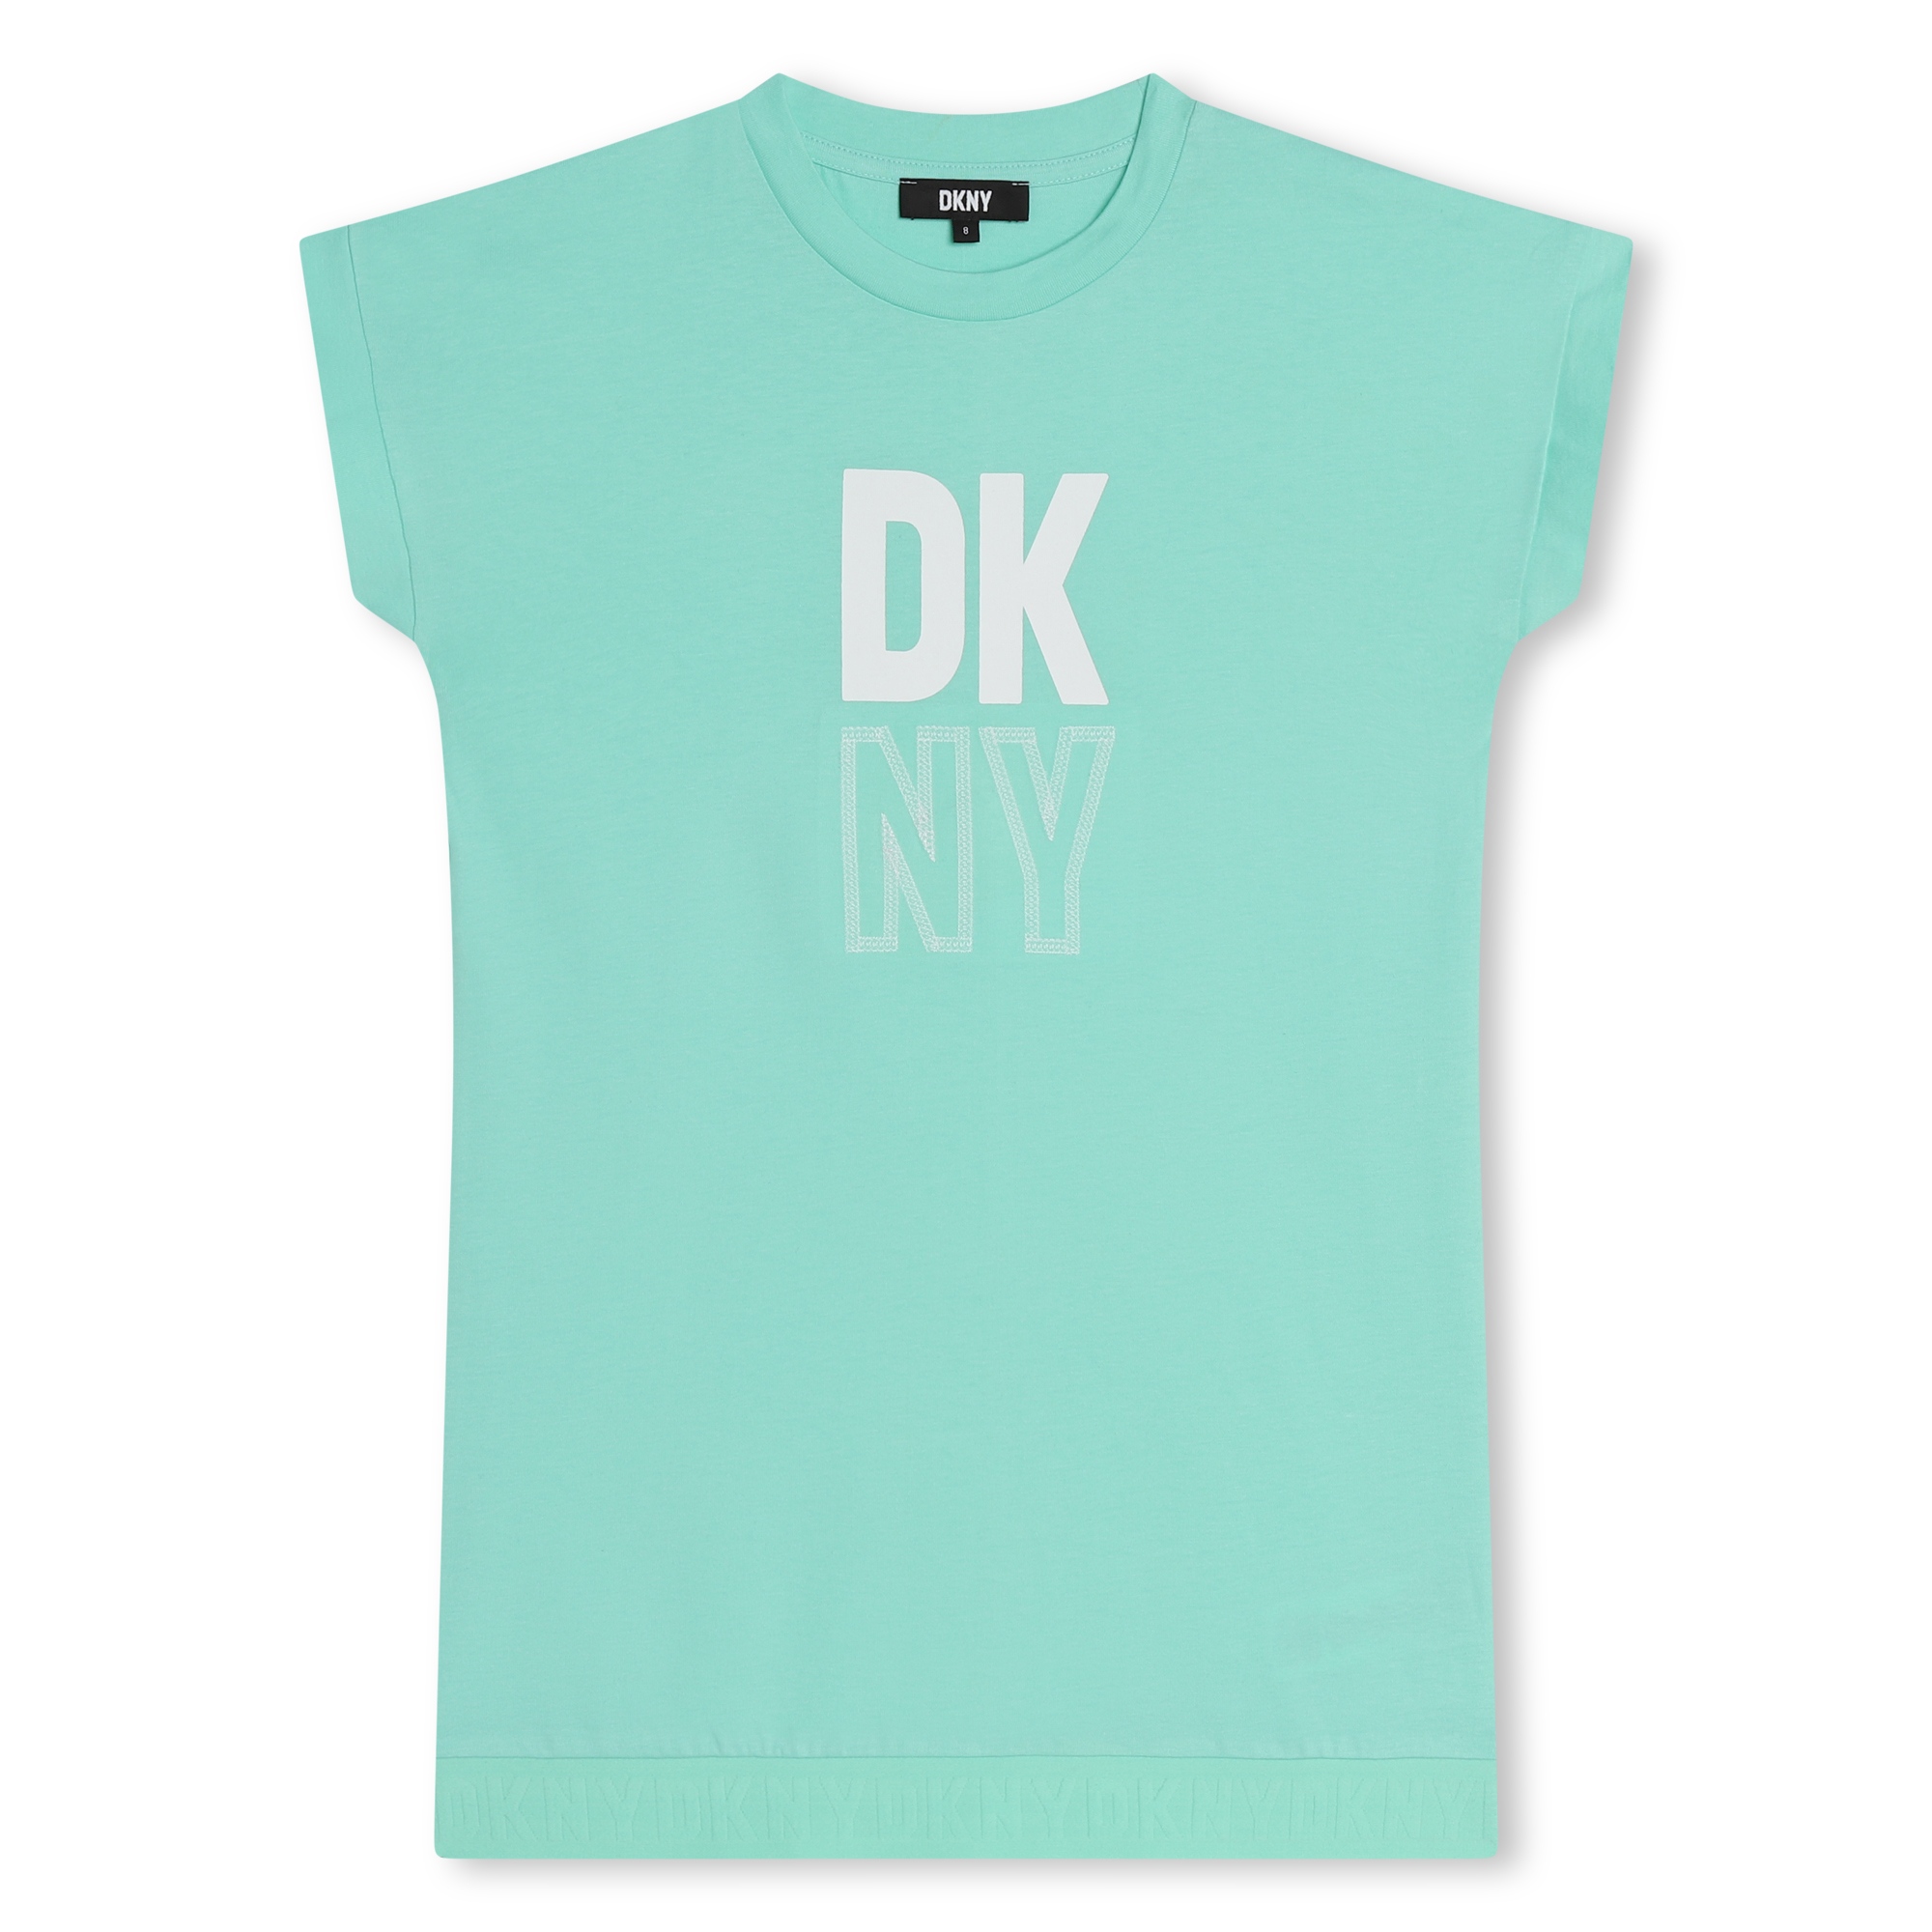 Vestido de manga corta DKNY para NIÑA